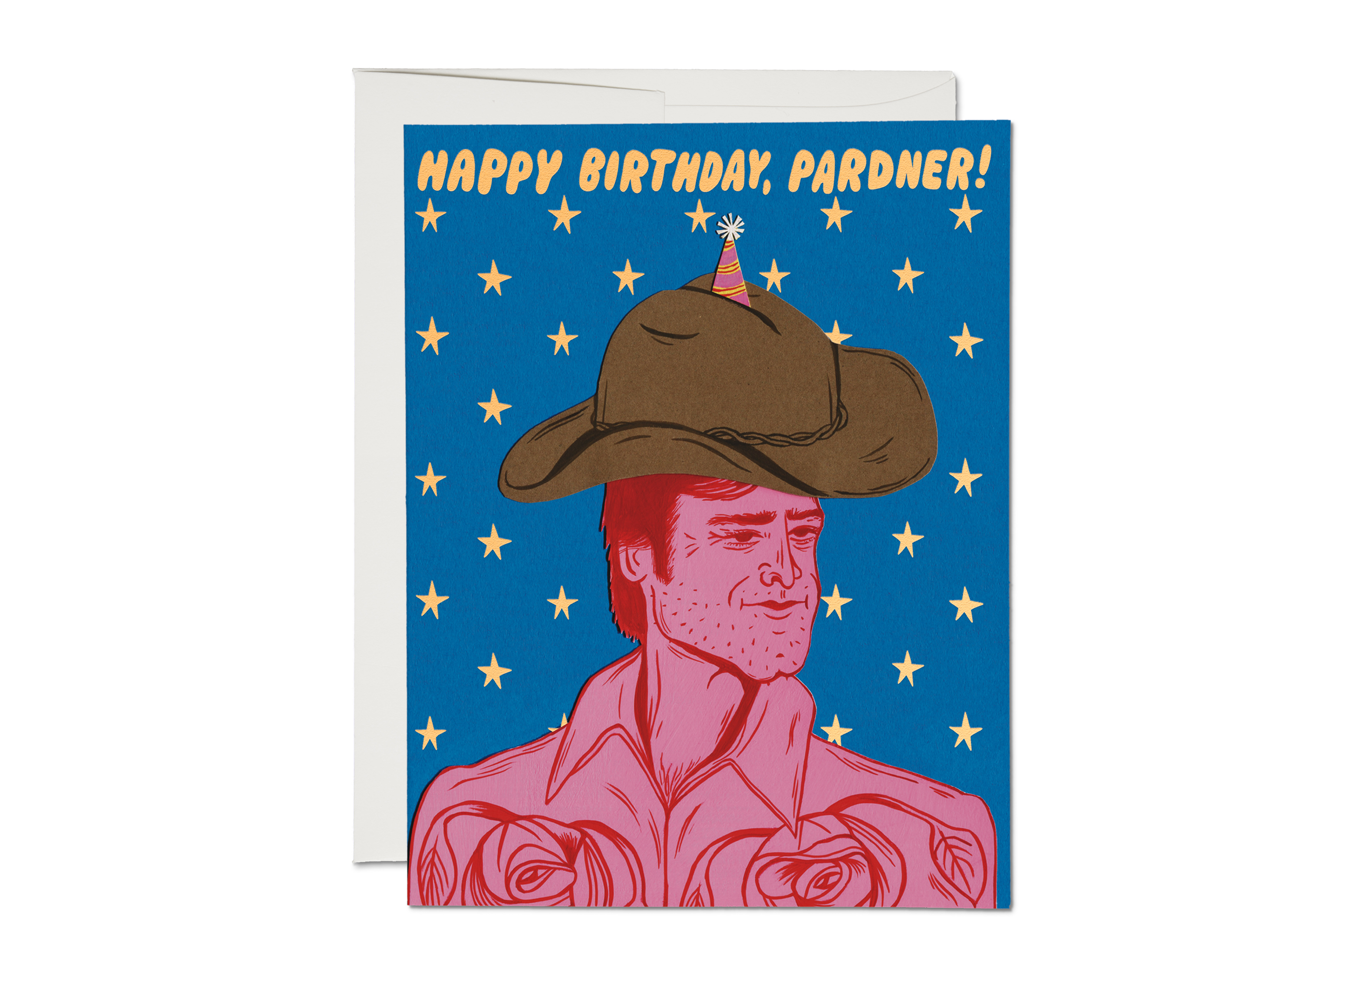 Red Cap Cards - RCC Birthday Pardner Card